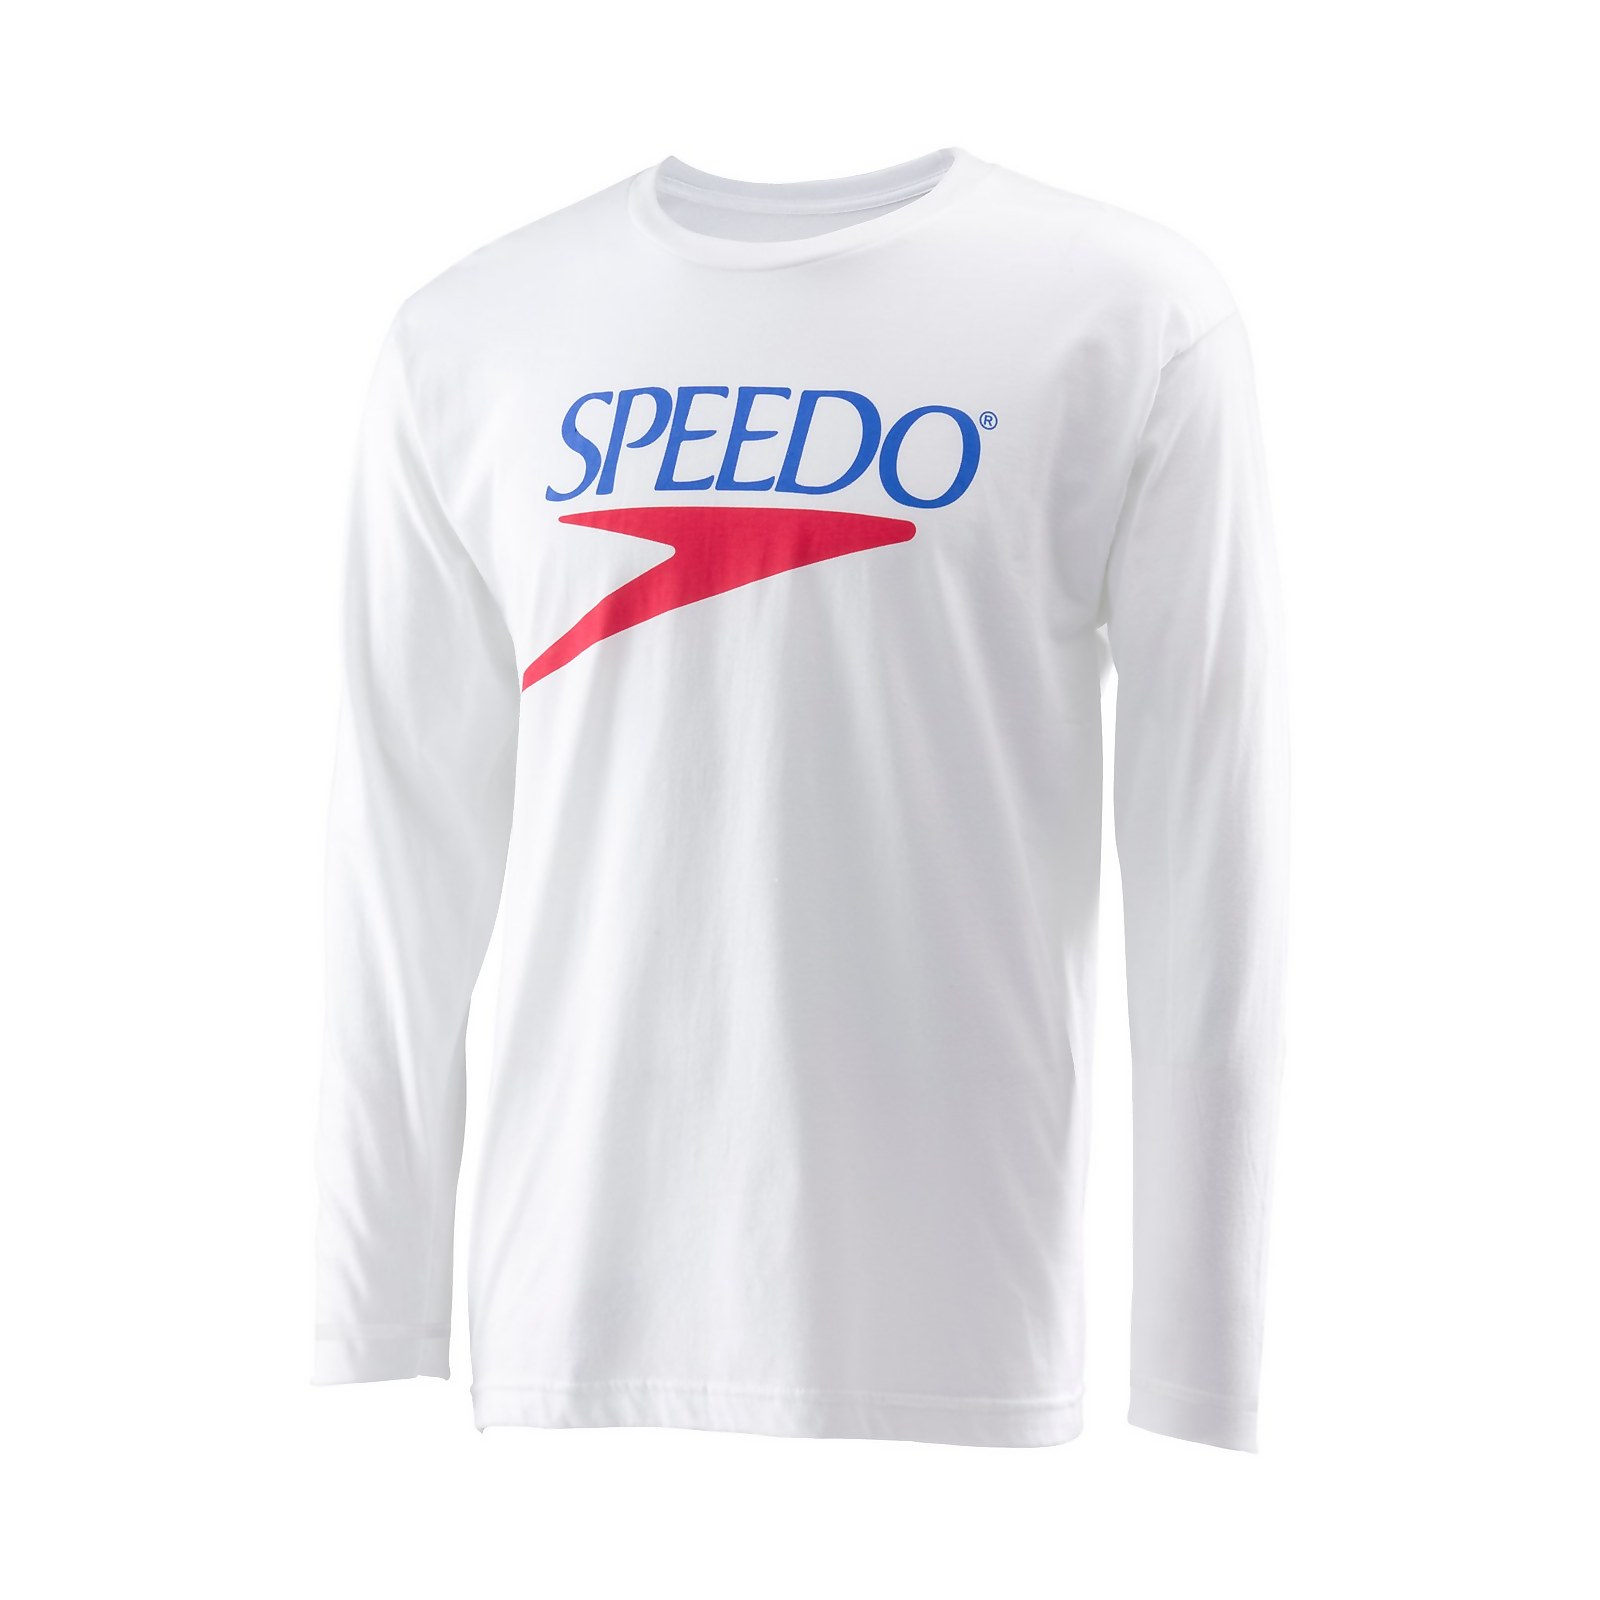 Speedo  Vintage Logo Long Sleeve Tee - S    : White